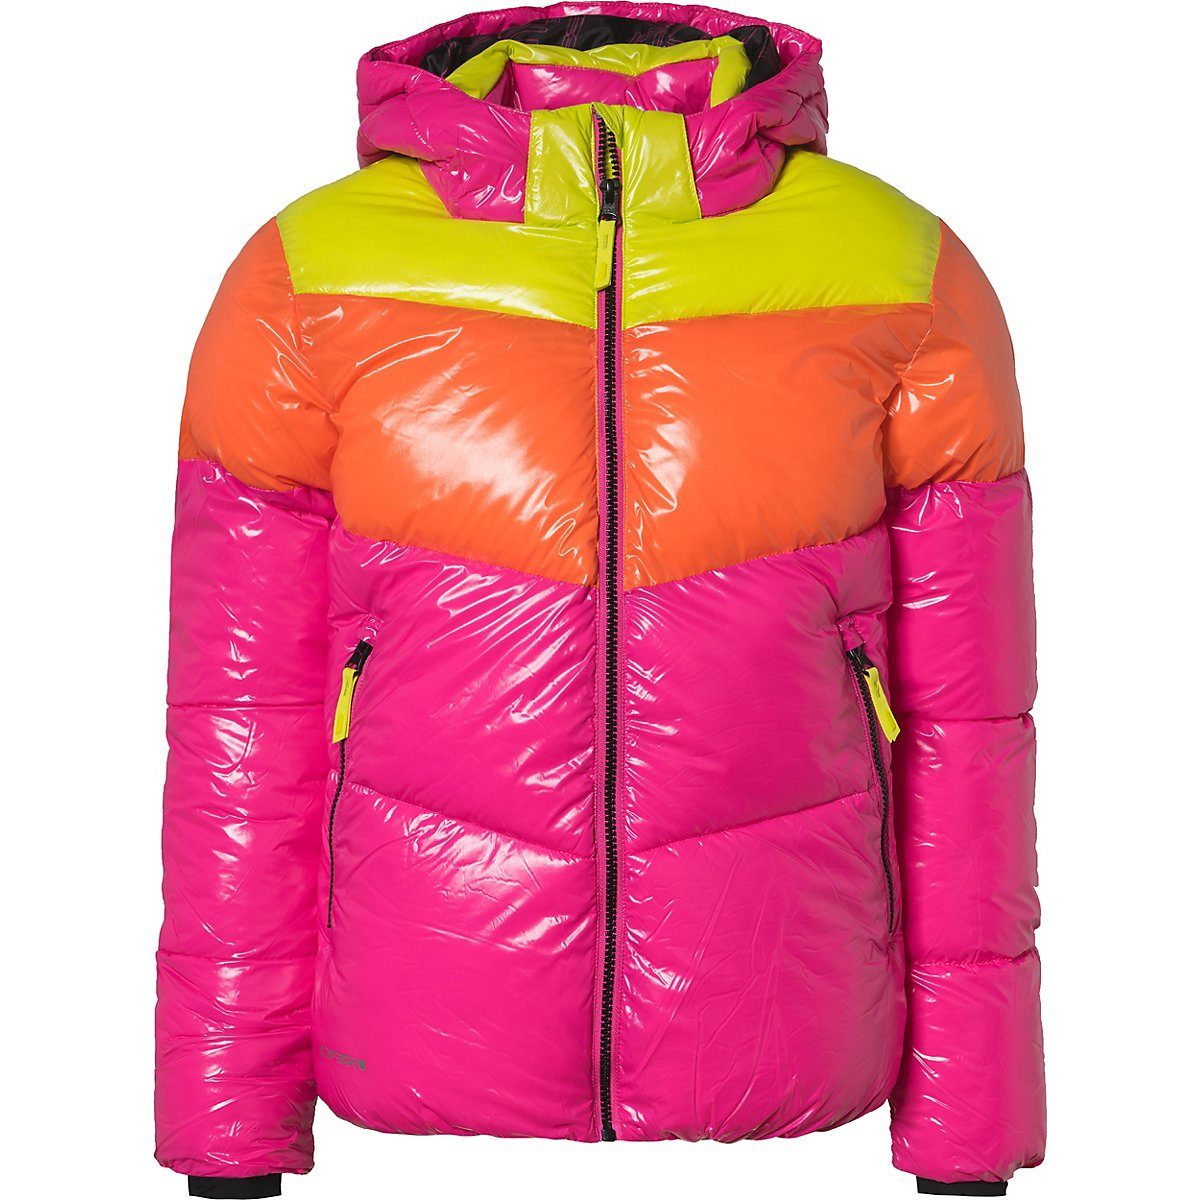 Icepeak Jacke Mädchen online kaufen | OTTO